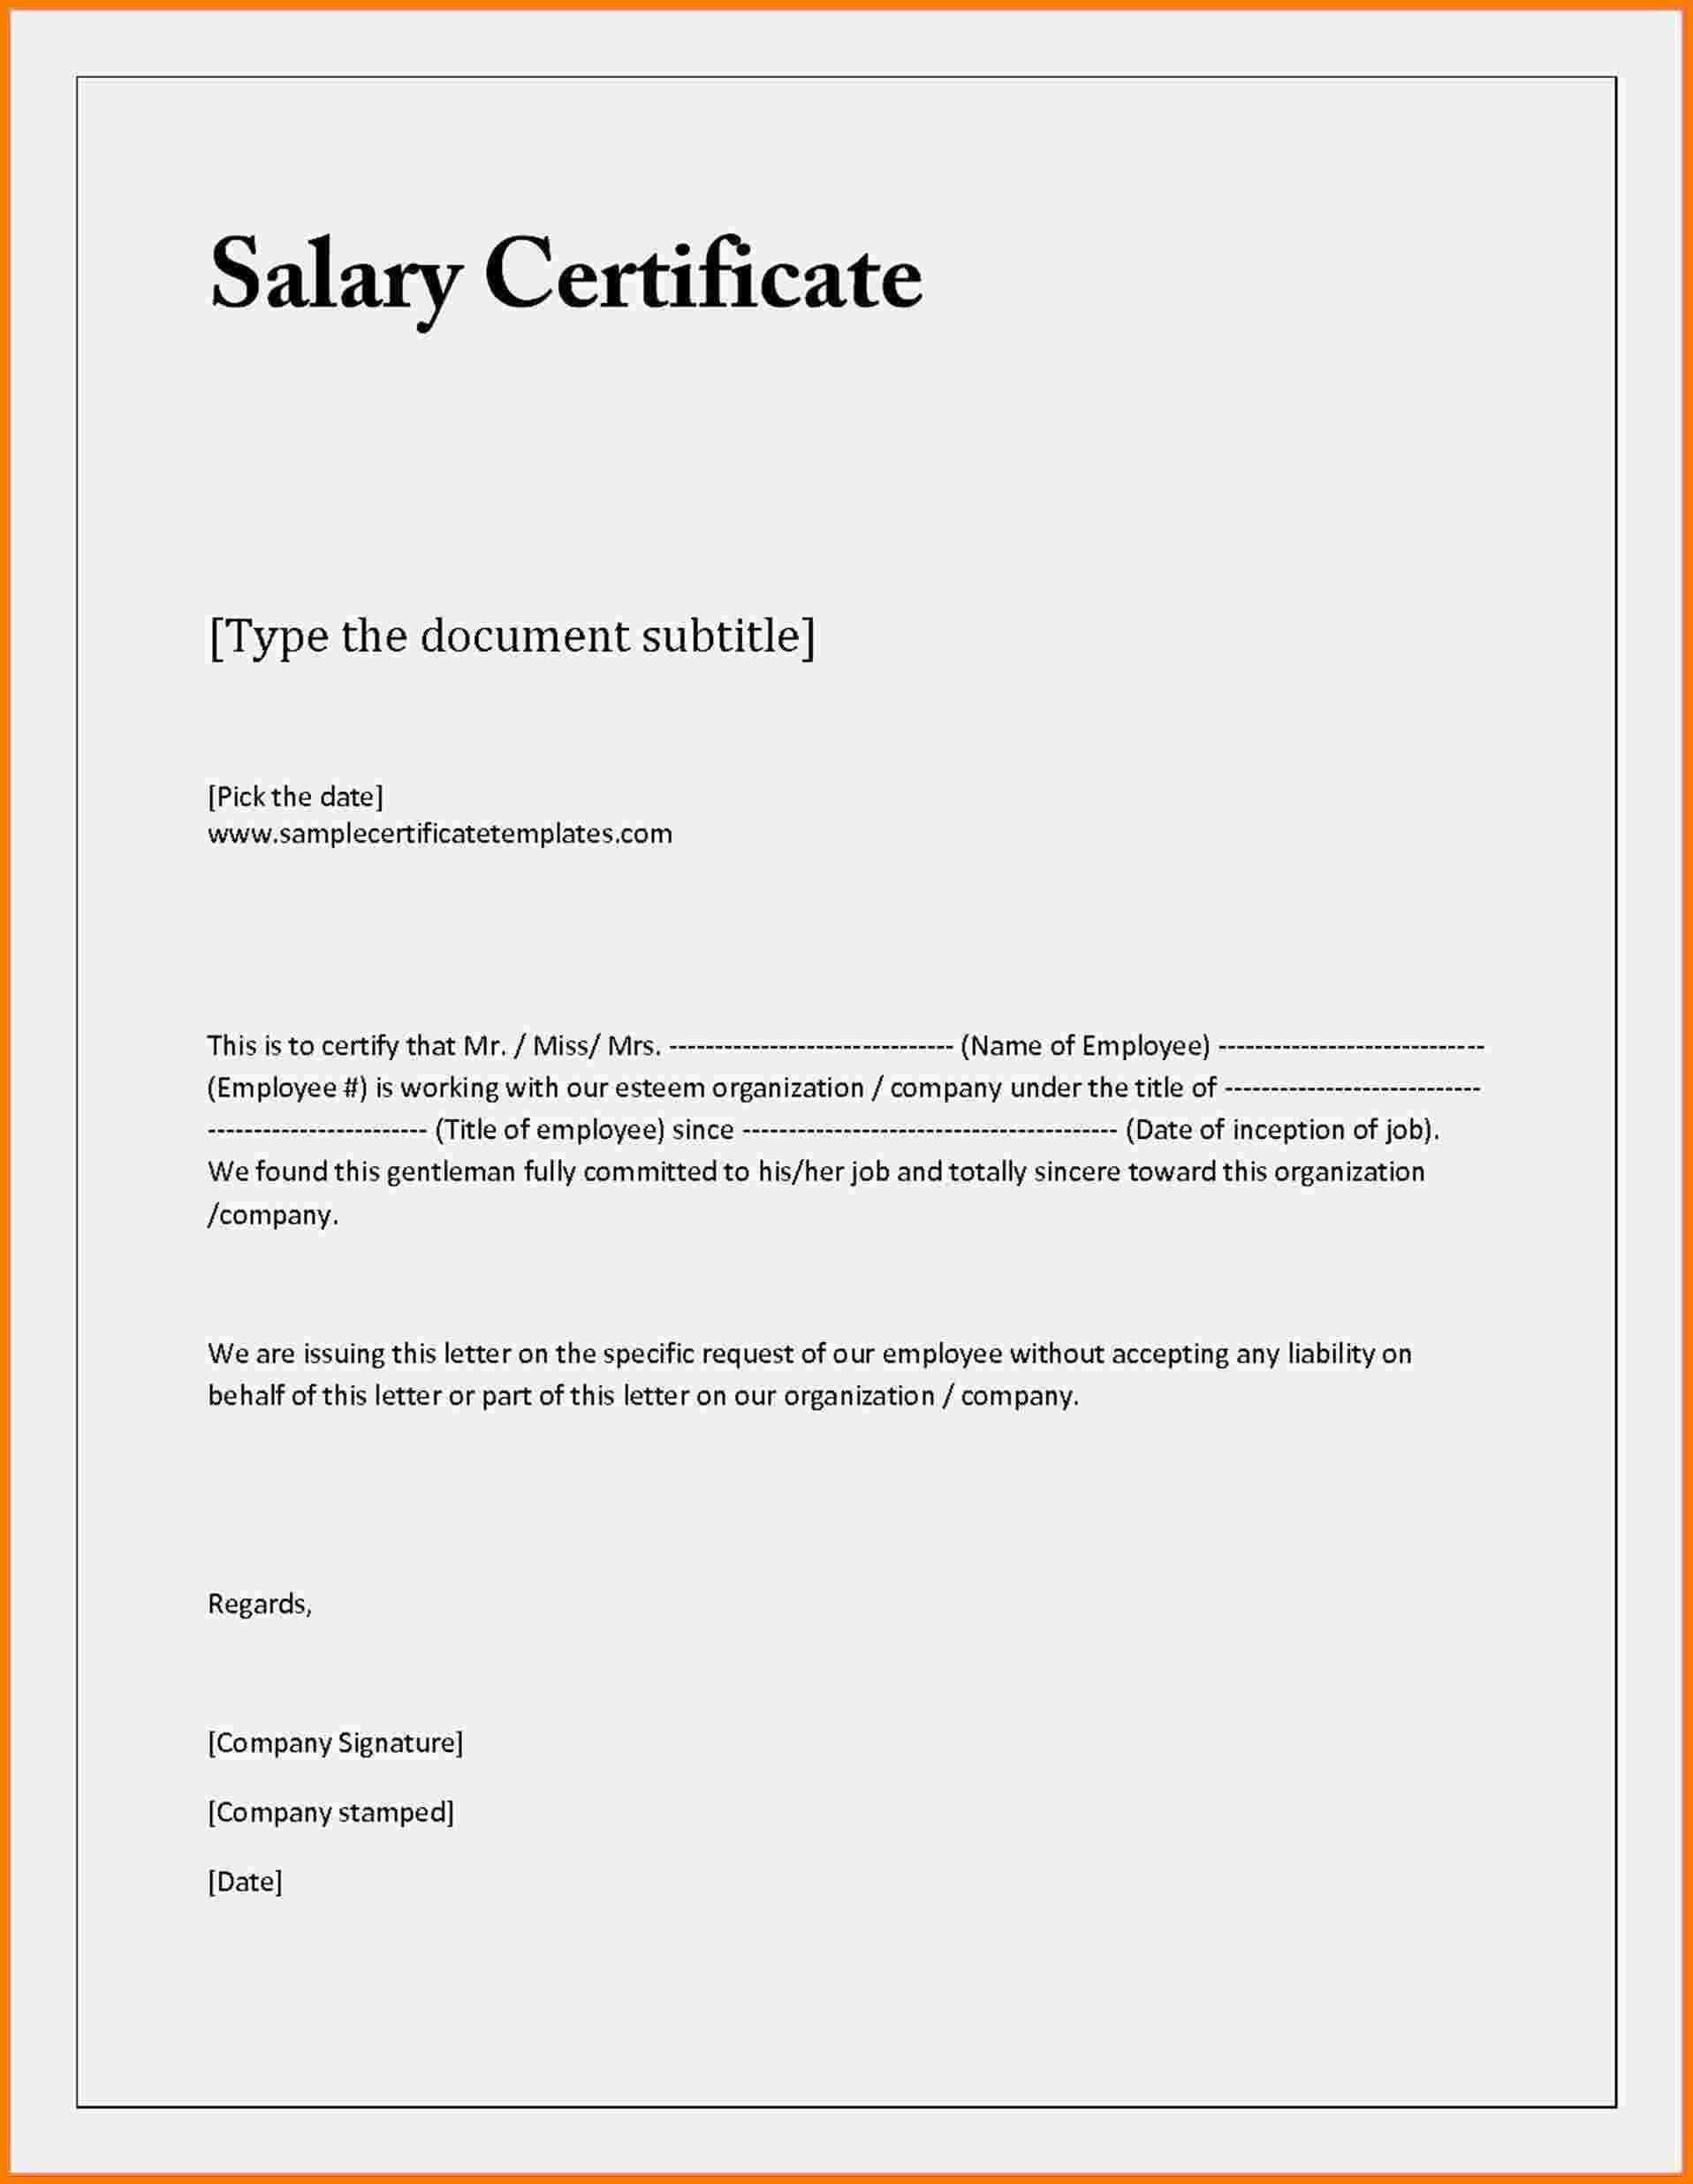 Employee Certificate Of Service Template - Best Business Regarding Employee Certificate Of Service Template